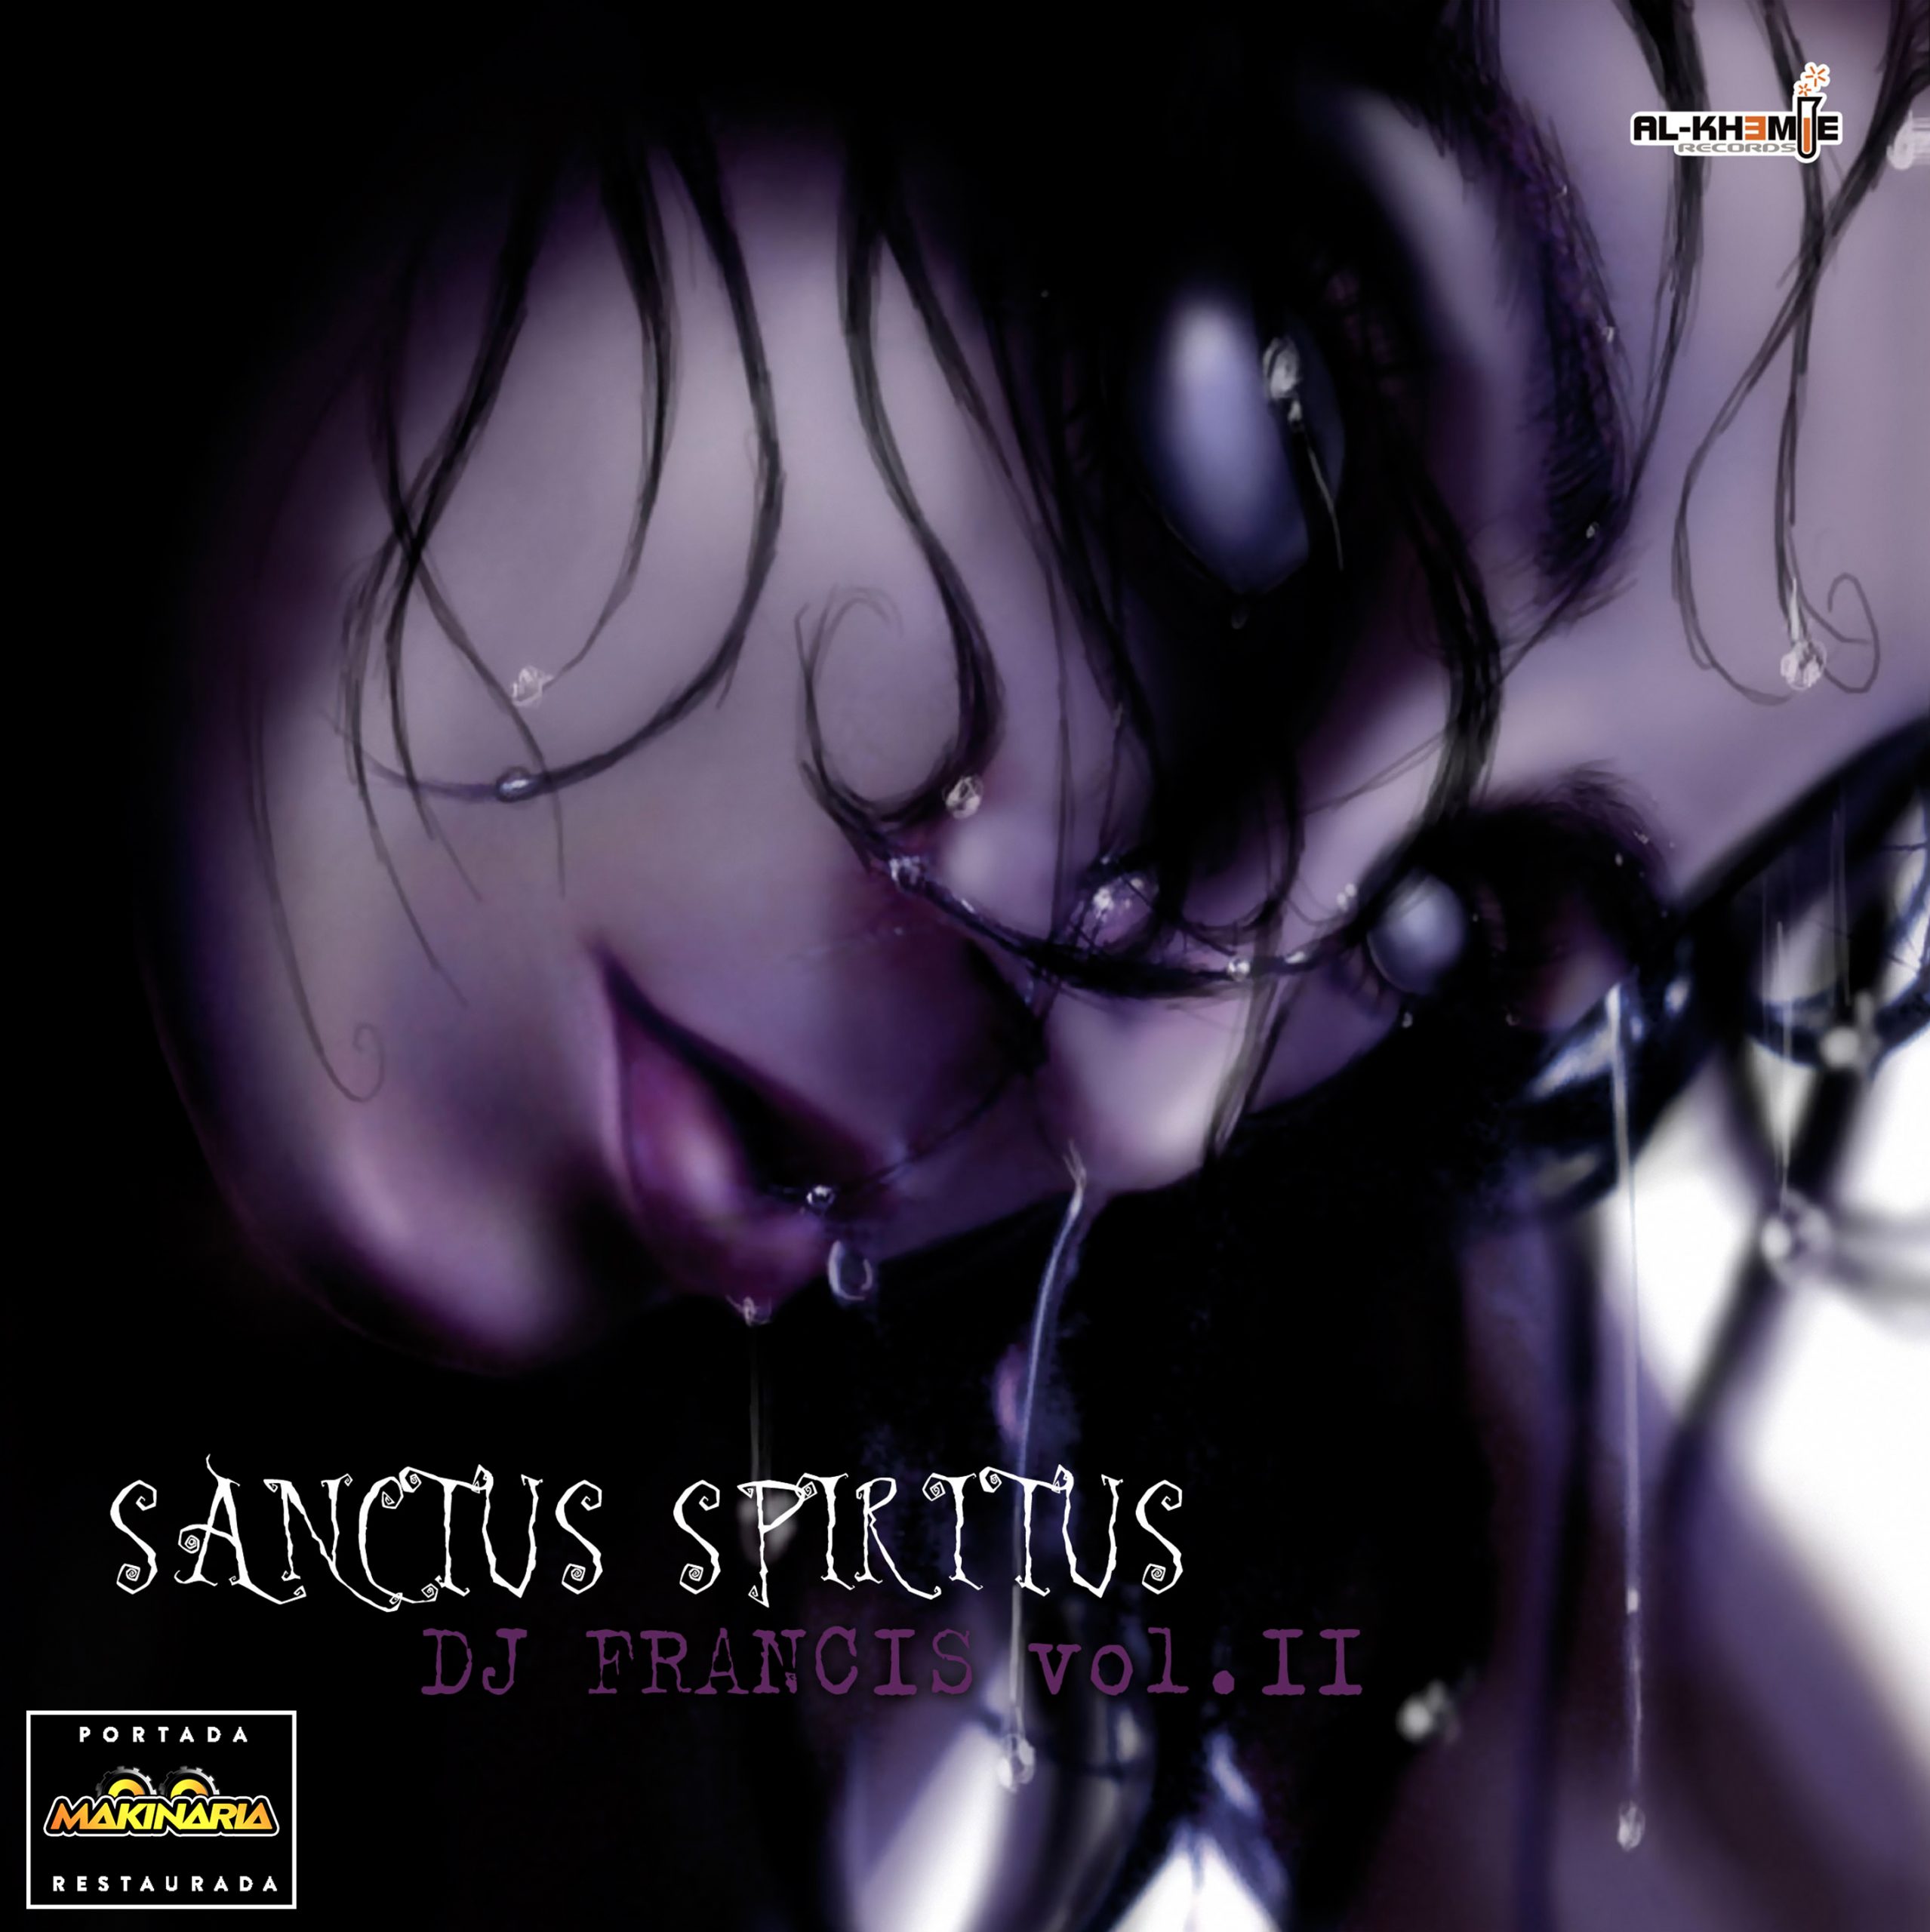 portada del disco makina de dj francis sanctus spiritus